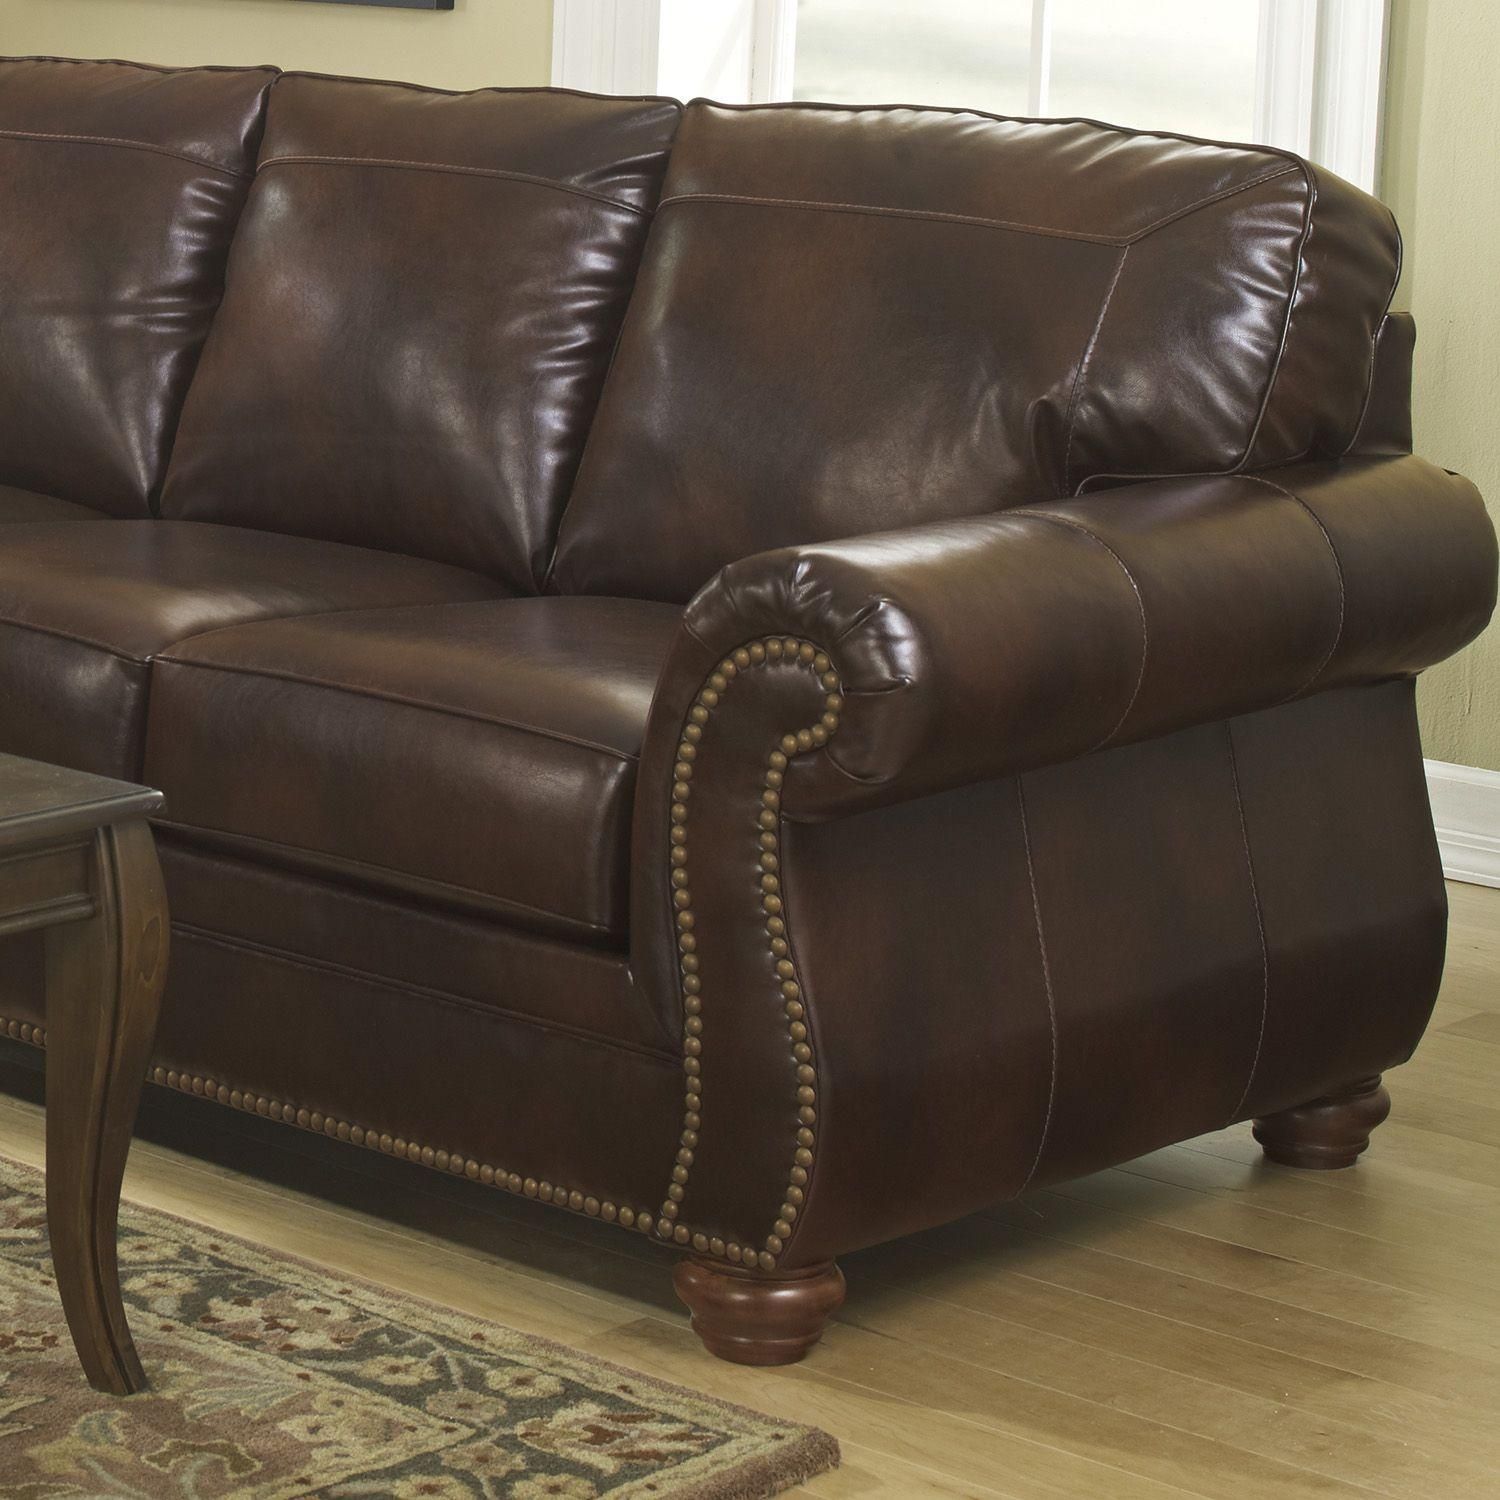 Comfy Berkline Sofa Design At Home — Home Design Stylinghome In Berkline Leather Sofas (View 4 of 20)